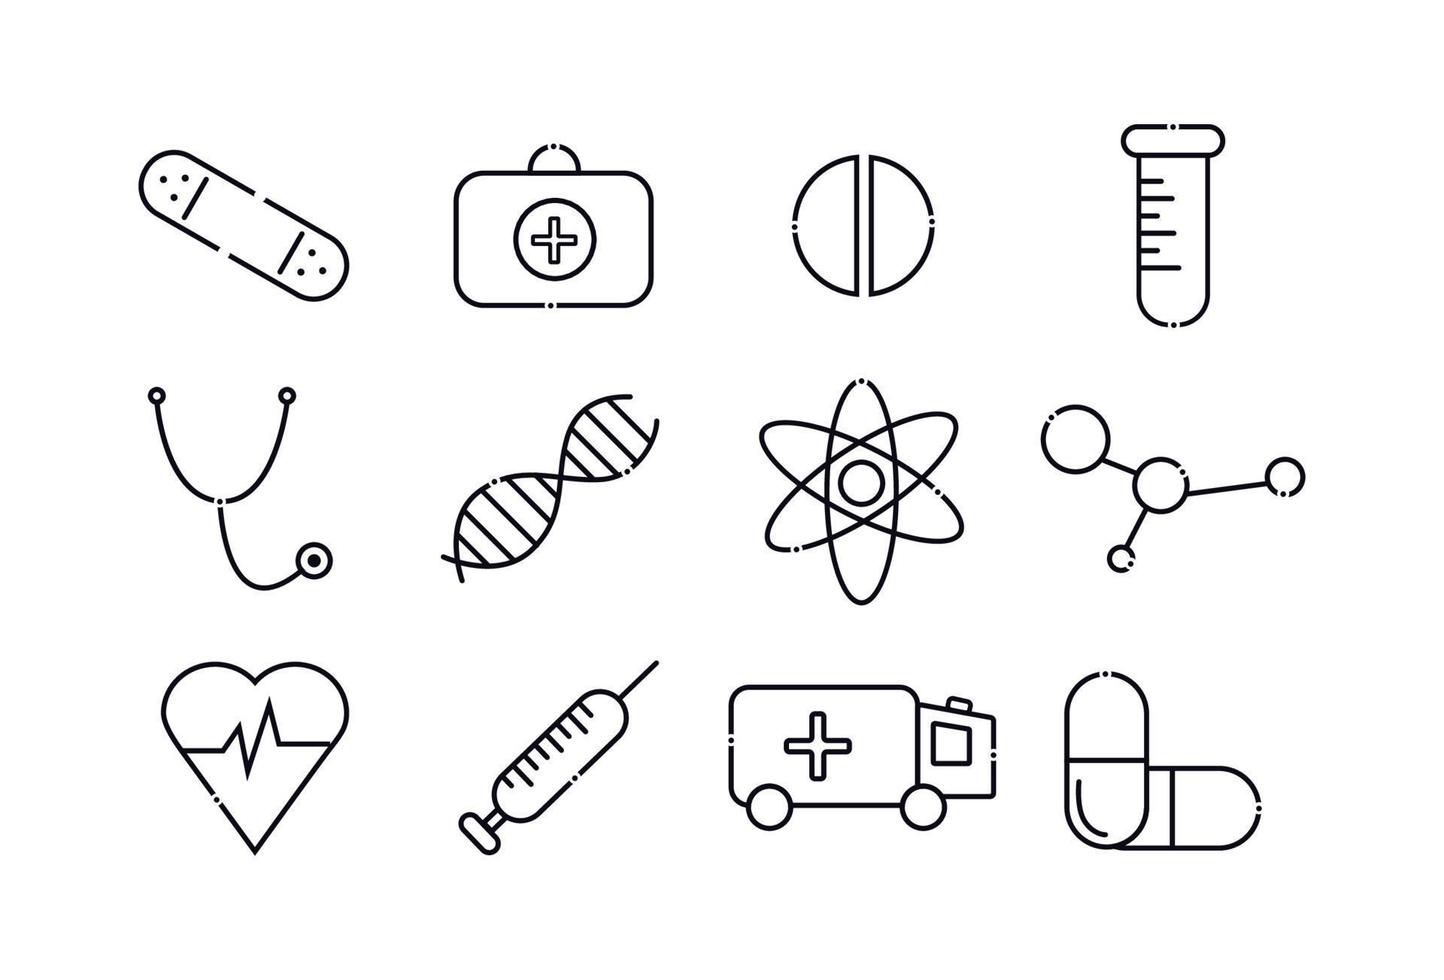 Medicine icons set. Elements in the set tablet, dna, syringe, capsule, heart, medical suitcase, stethoscope, ambulance, ambulance, test tube. vector